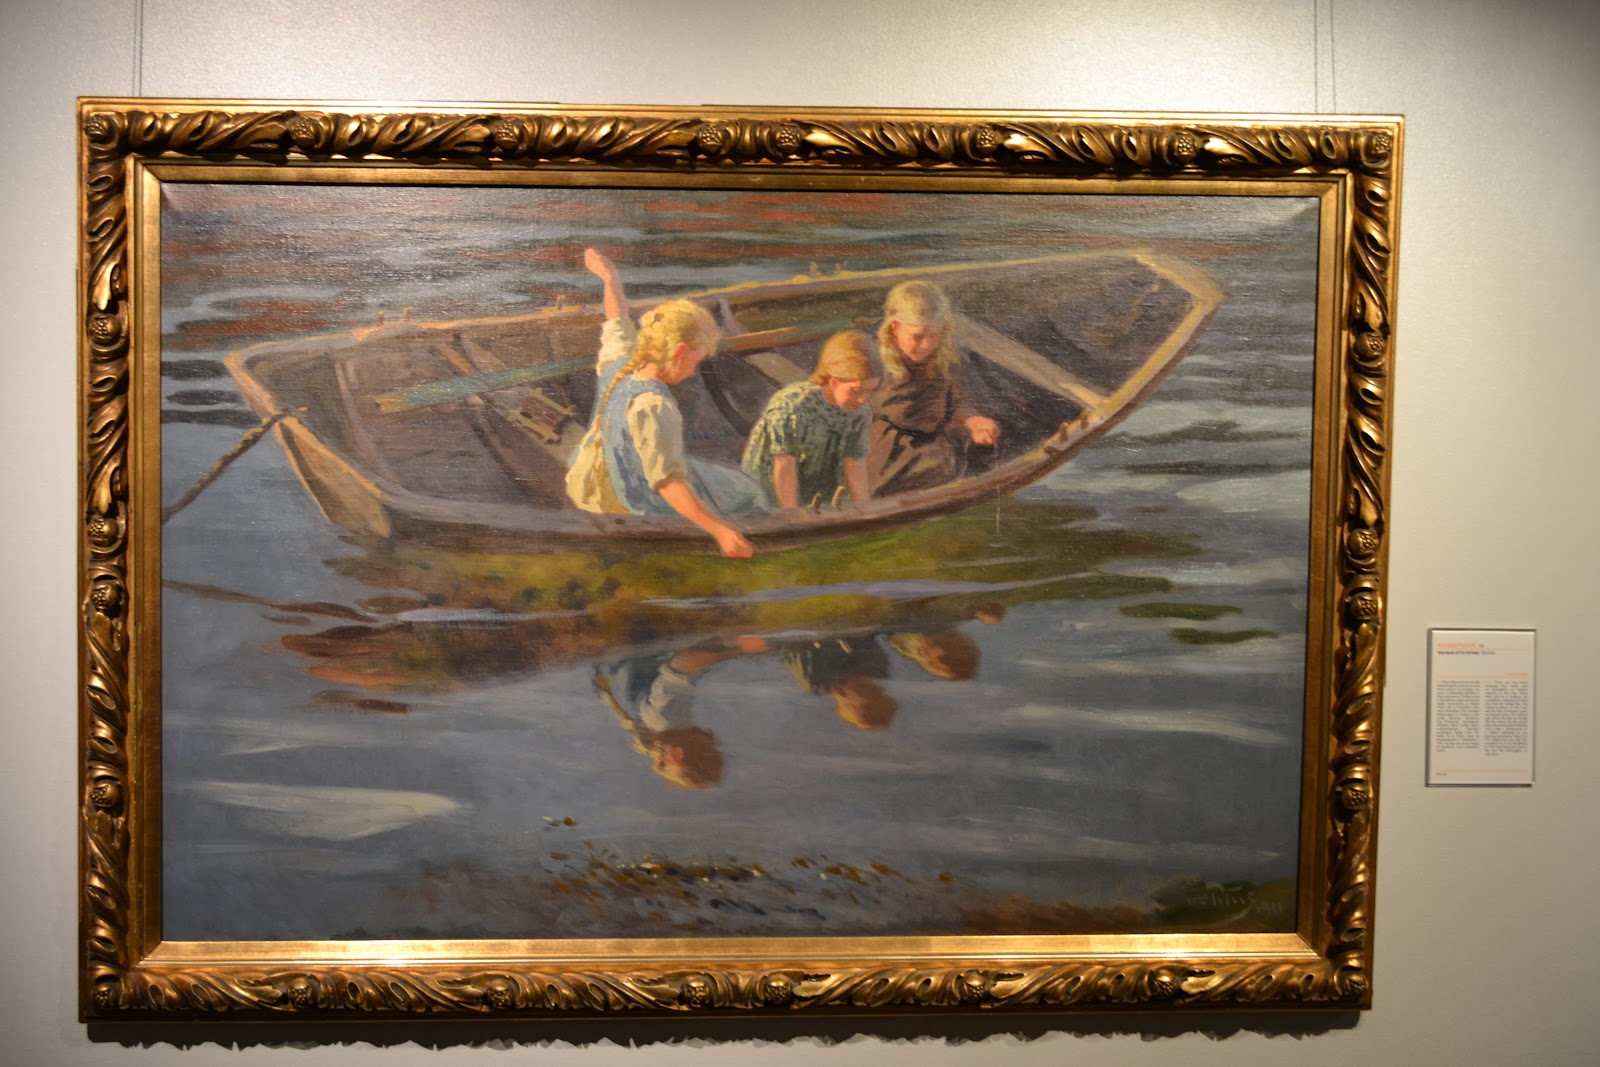 Beautiful painting related to marine displayed at the Norwegian Maritime Museum